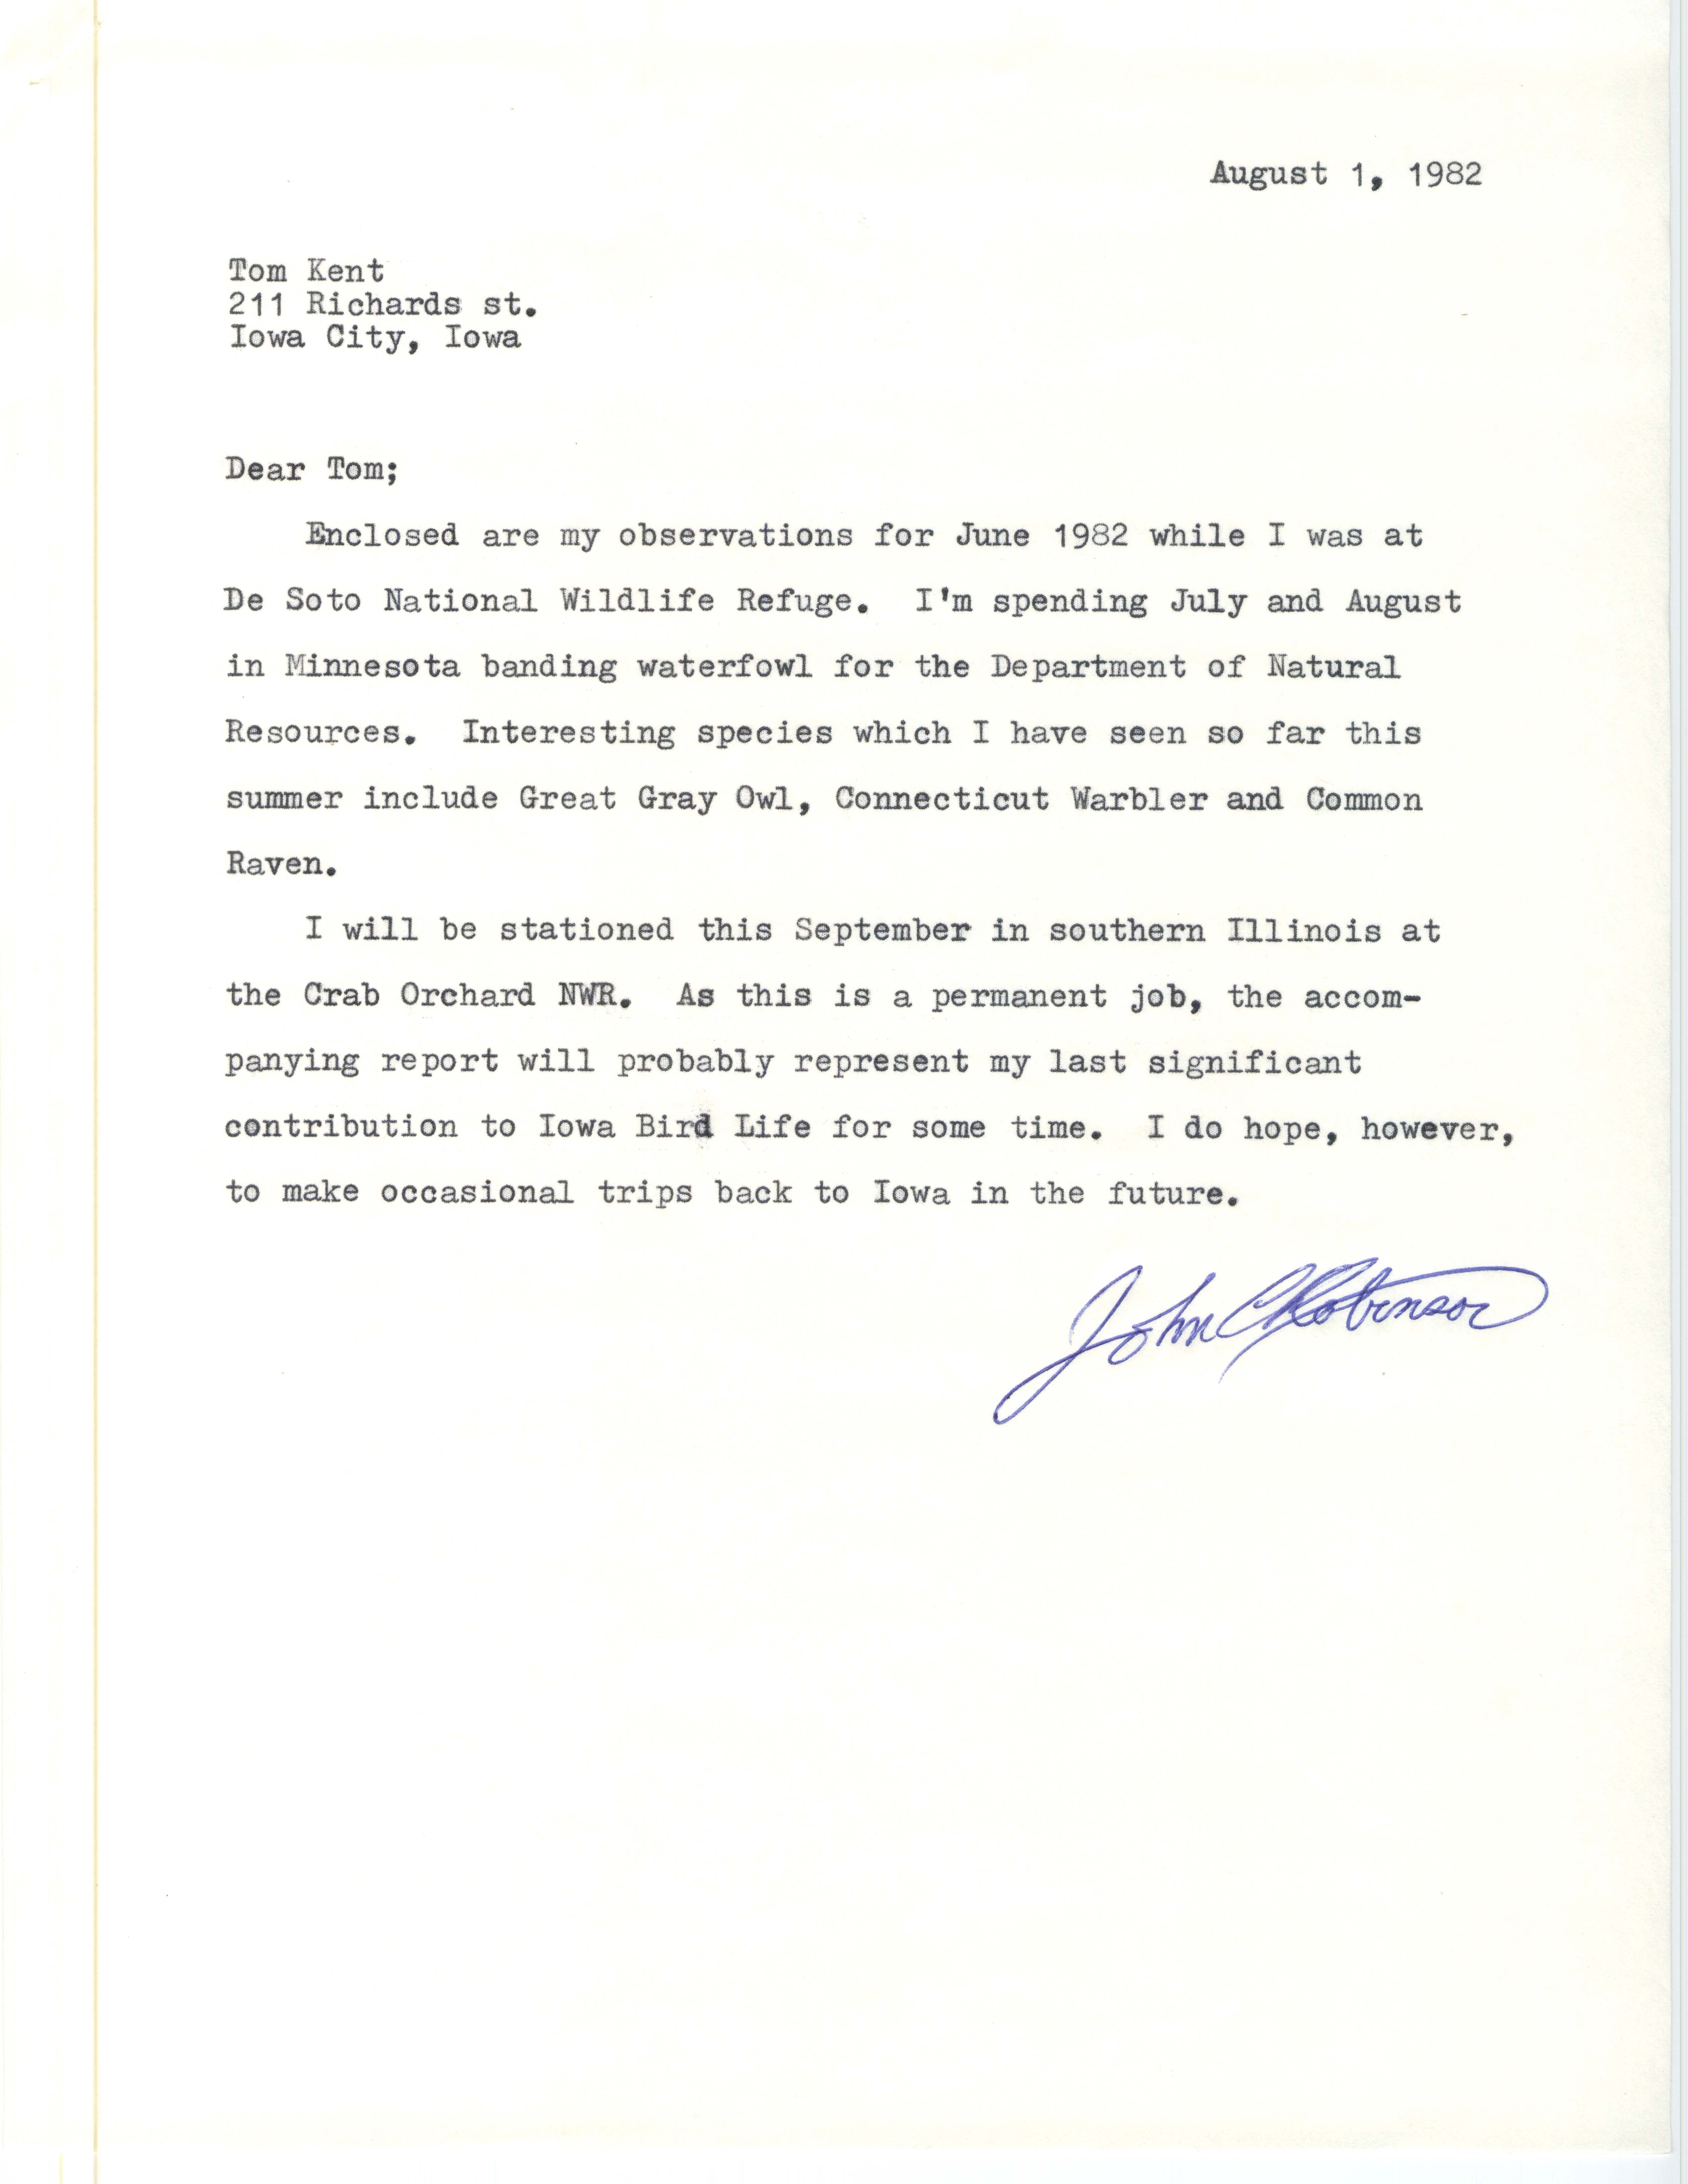 John C. Robinson letter to Thomas H. Kent regarding field report, August 1, 1982